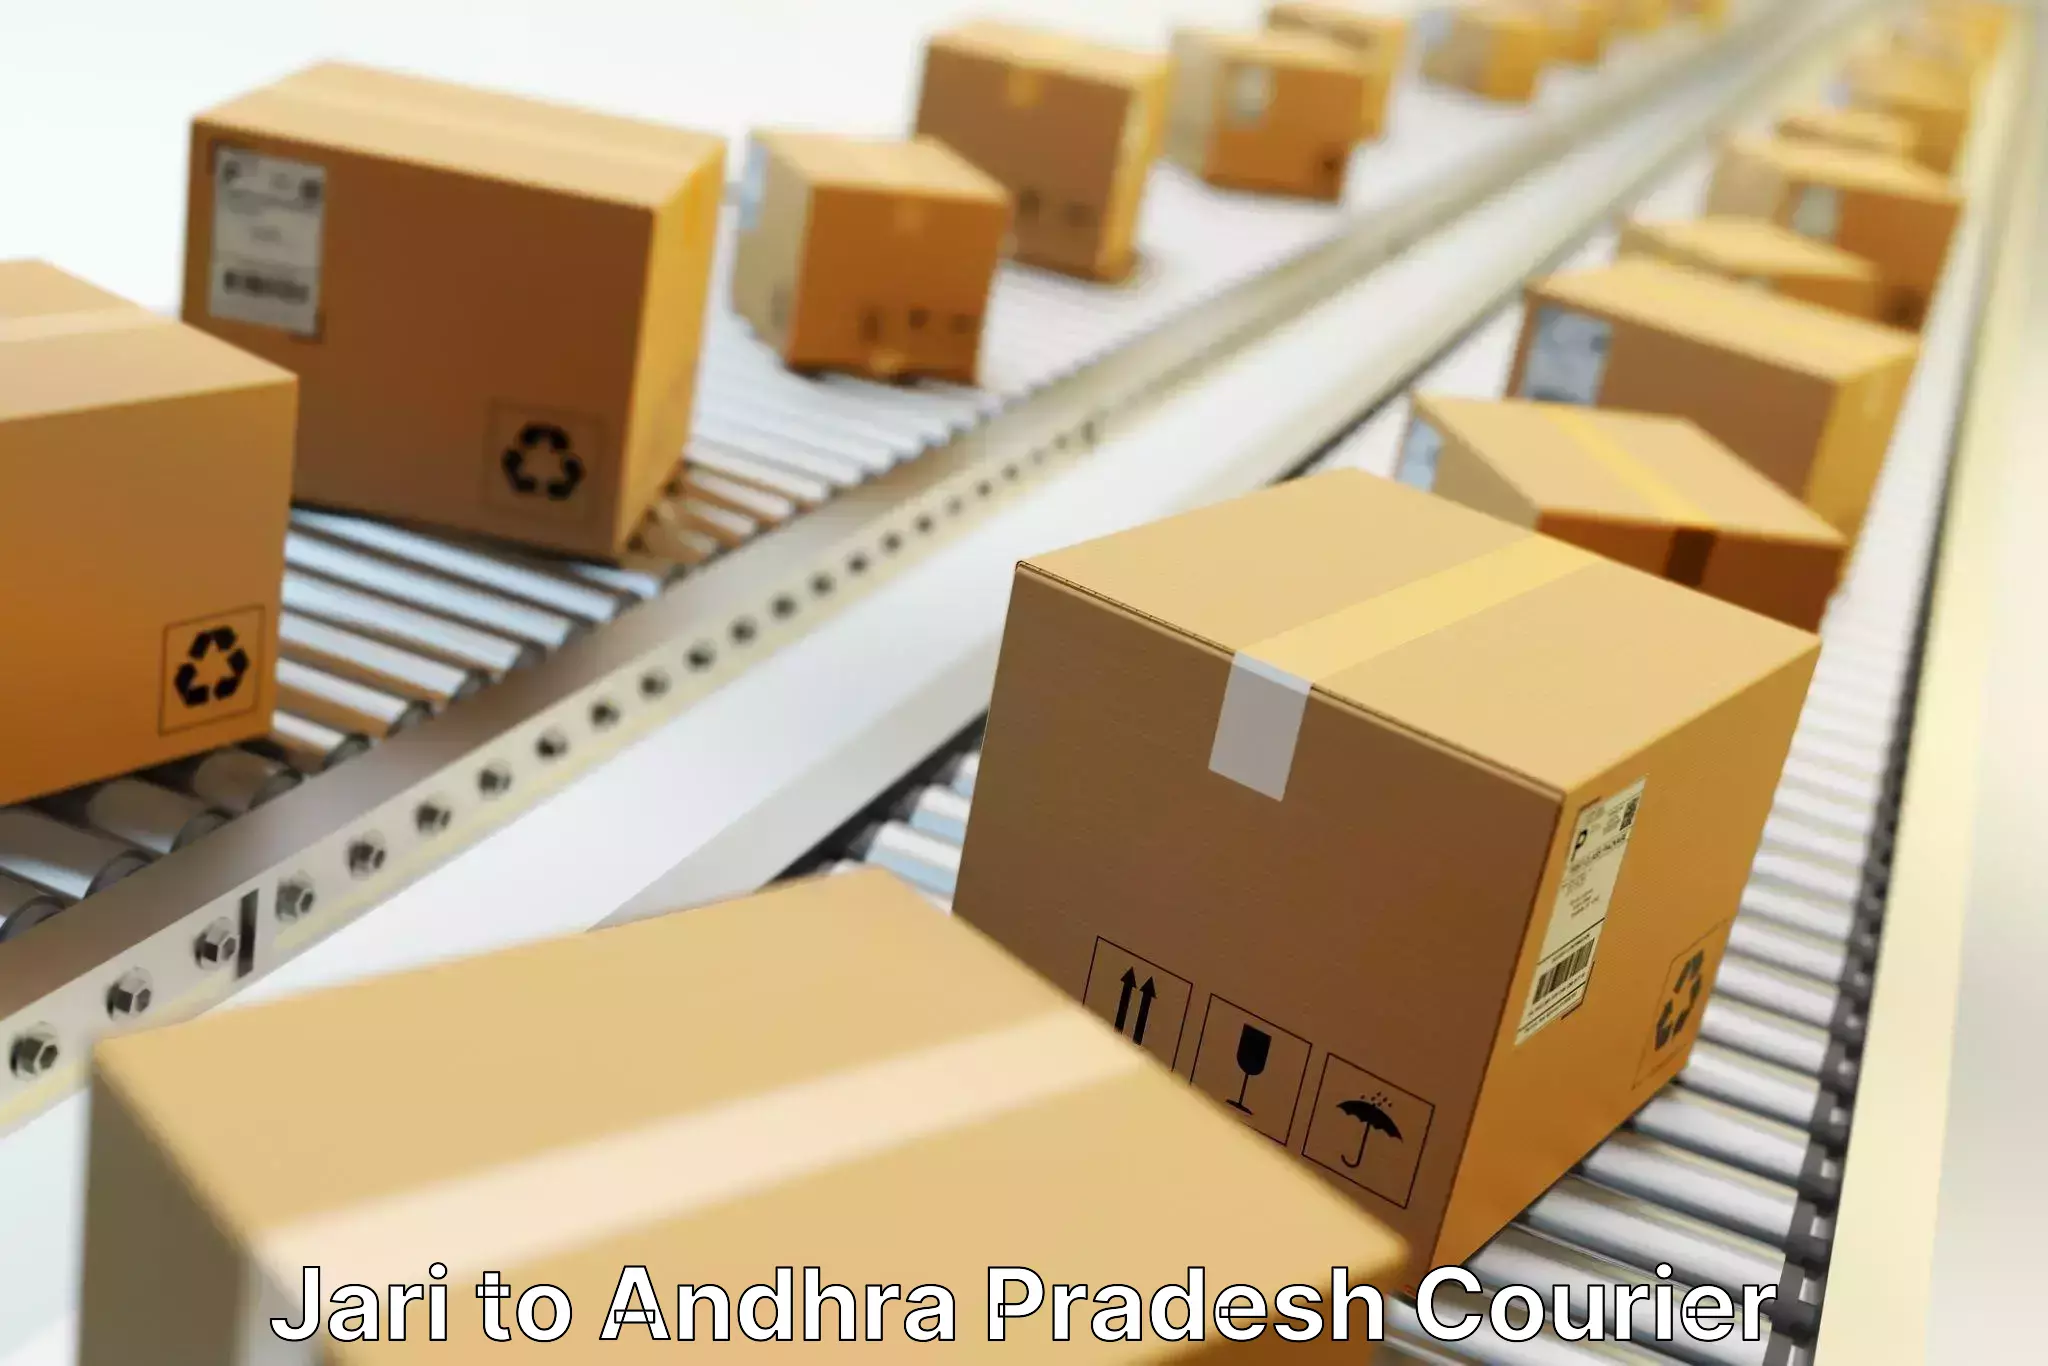 Full-service courier options Jari to Andhra Pradesh